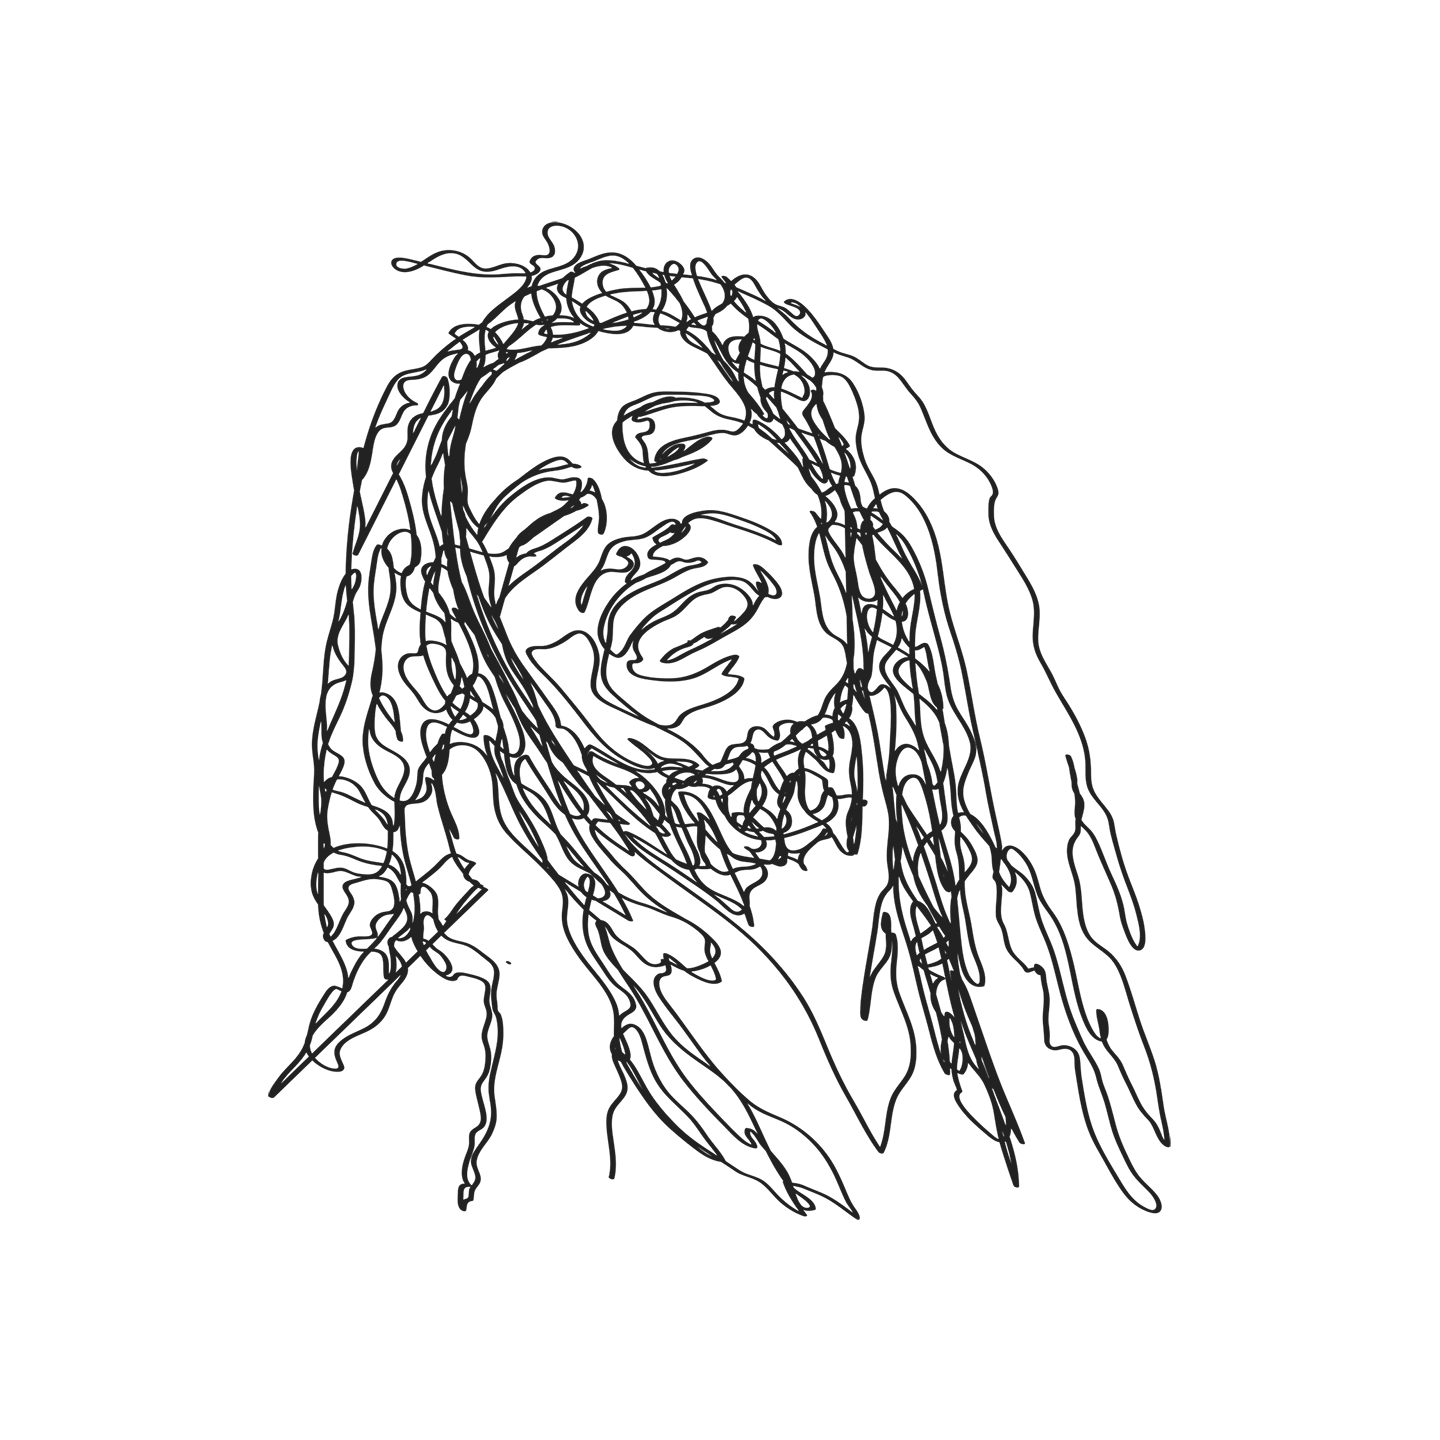 Illustration of Bob Marley